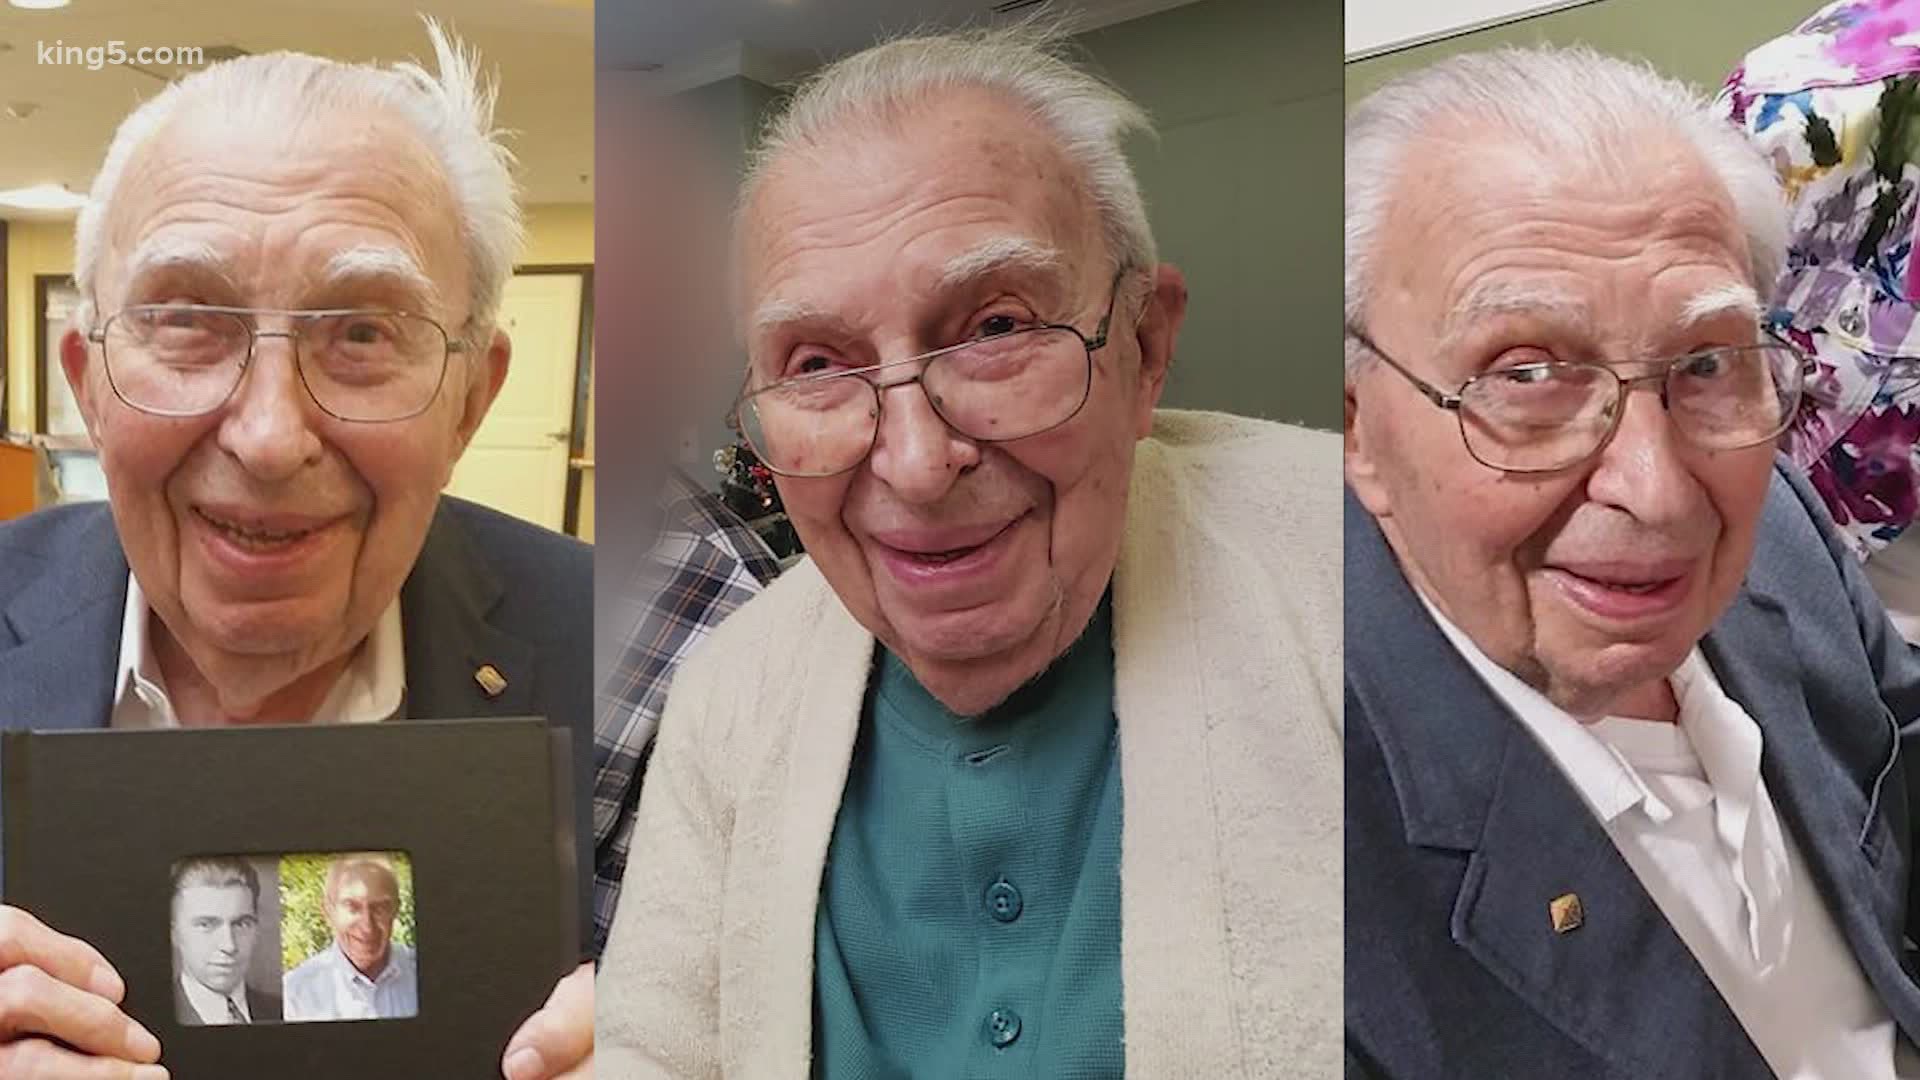 Rudi Heider has lived through the Spanish Flu, Great Depression, and World War II. Now on his 107th birthday, Rudi can add 'coronavirus survivor' to the list.